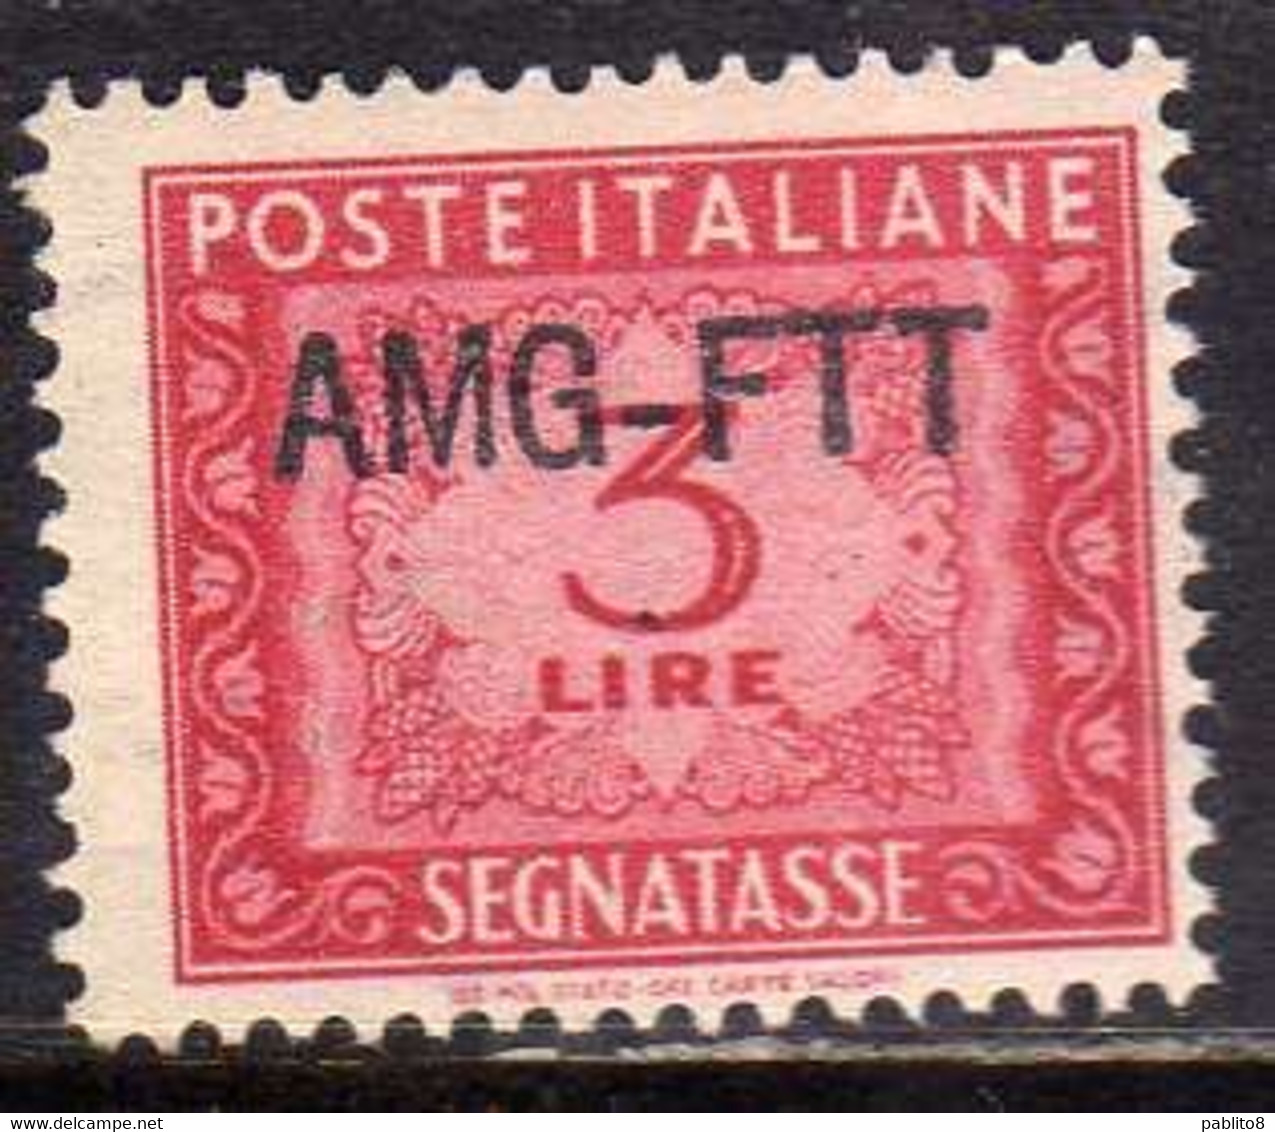 TRIESTE A 1949 1954 AMG-FTT SOPRASTAMPATO D'ITALIA ITALY OVERPRINTED SEGNATASSE POSTAGE DUE TAXES TASSE LIRE 3 MNH - Portomarken